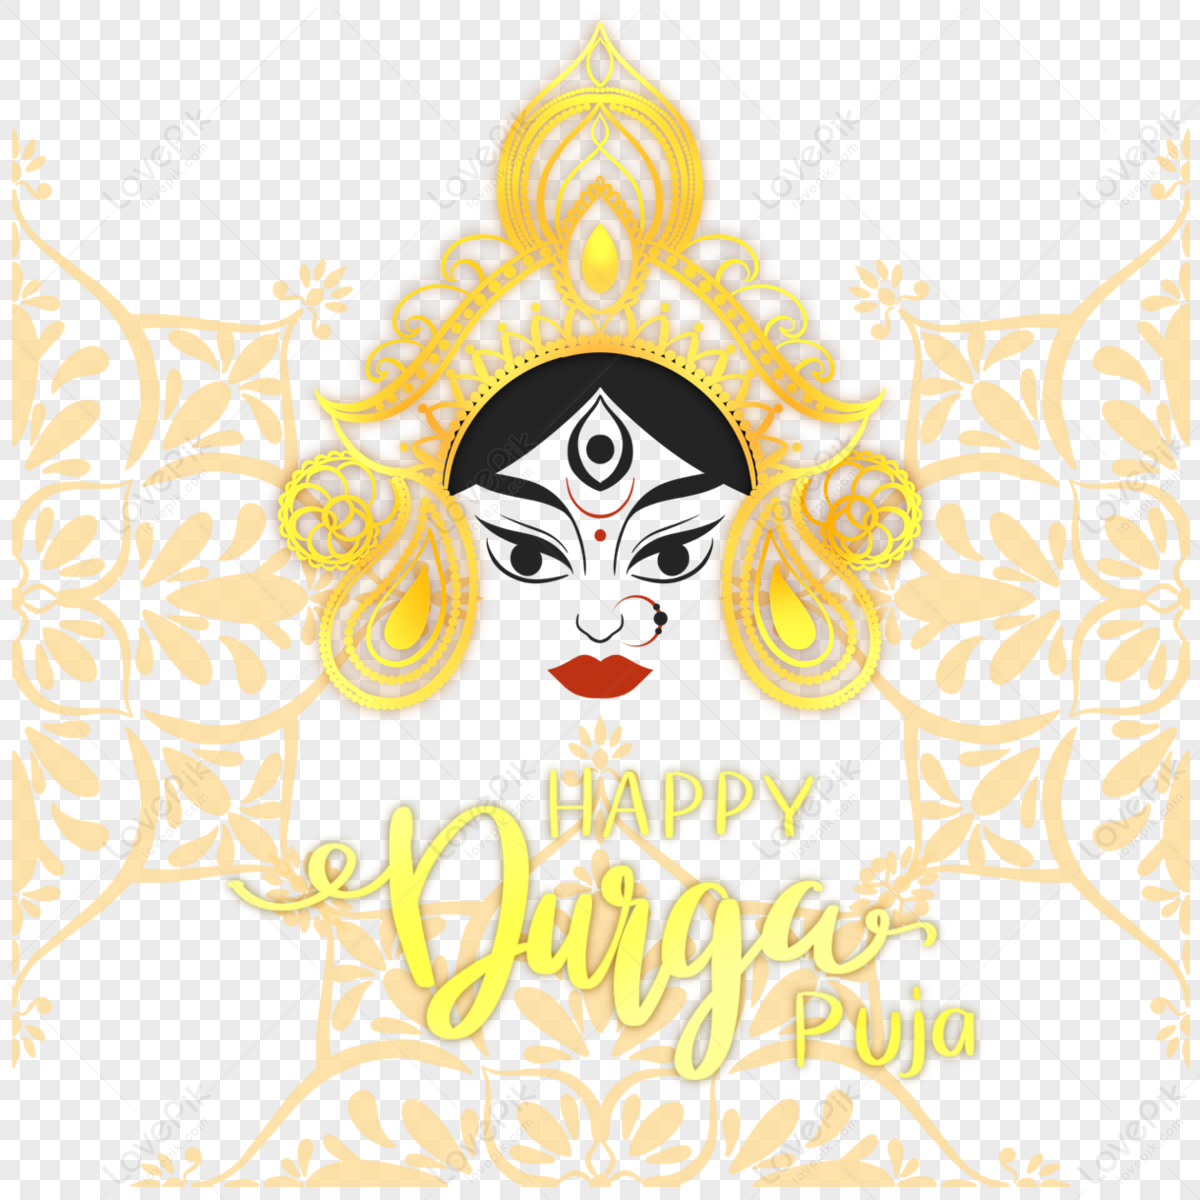 Durga Puja Greeting Card Vector in PSD, SVG, Illustrator, JPG, EPS, PNG -  Download | Template.net